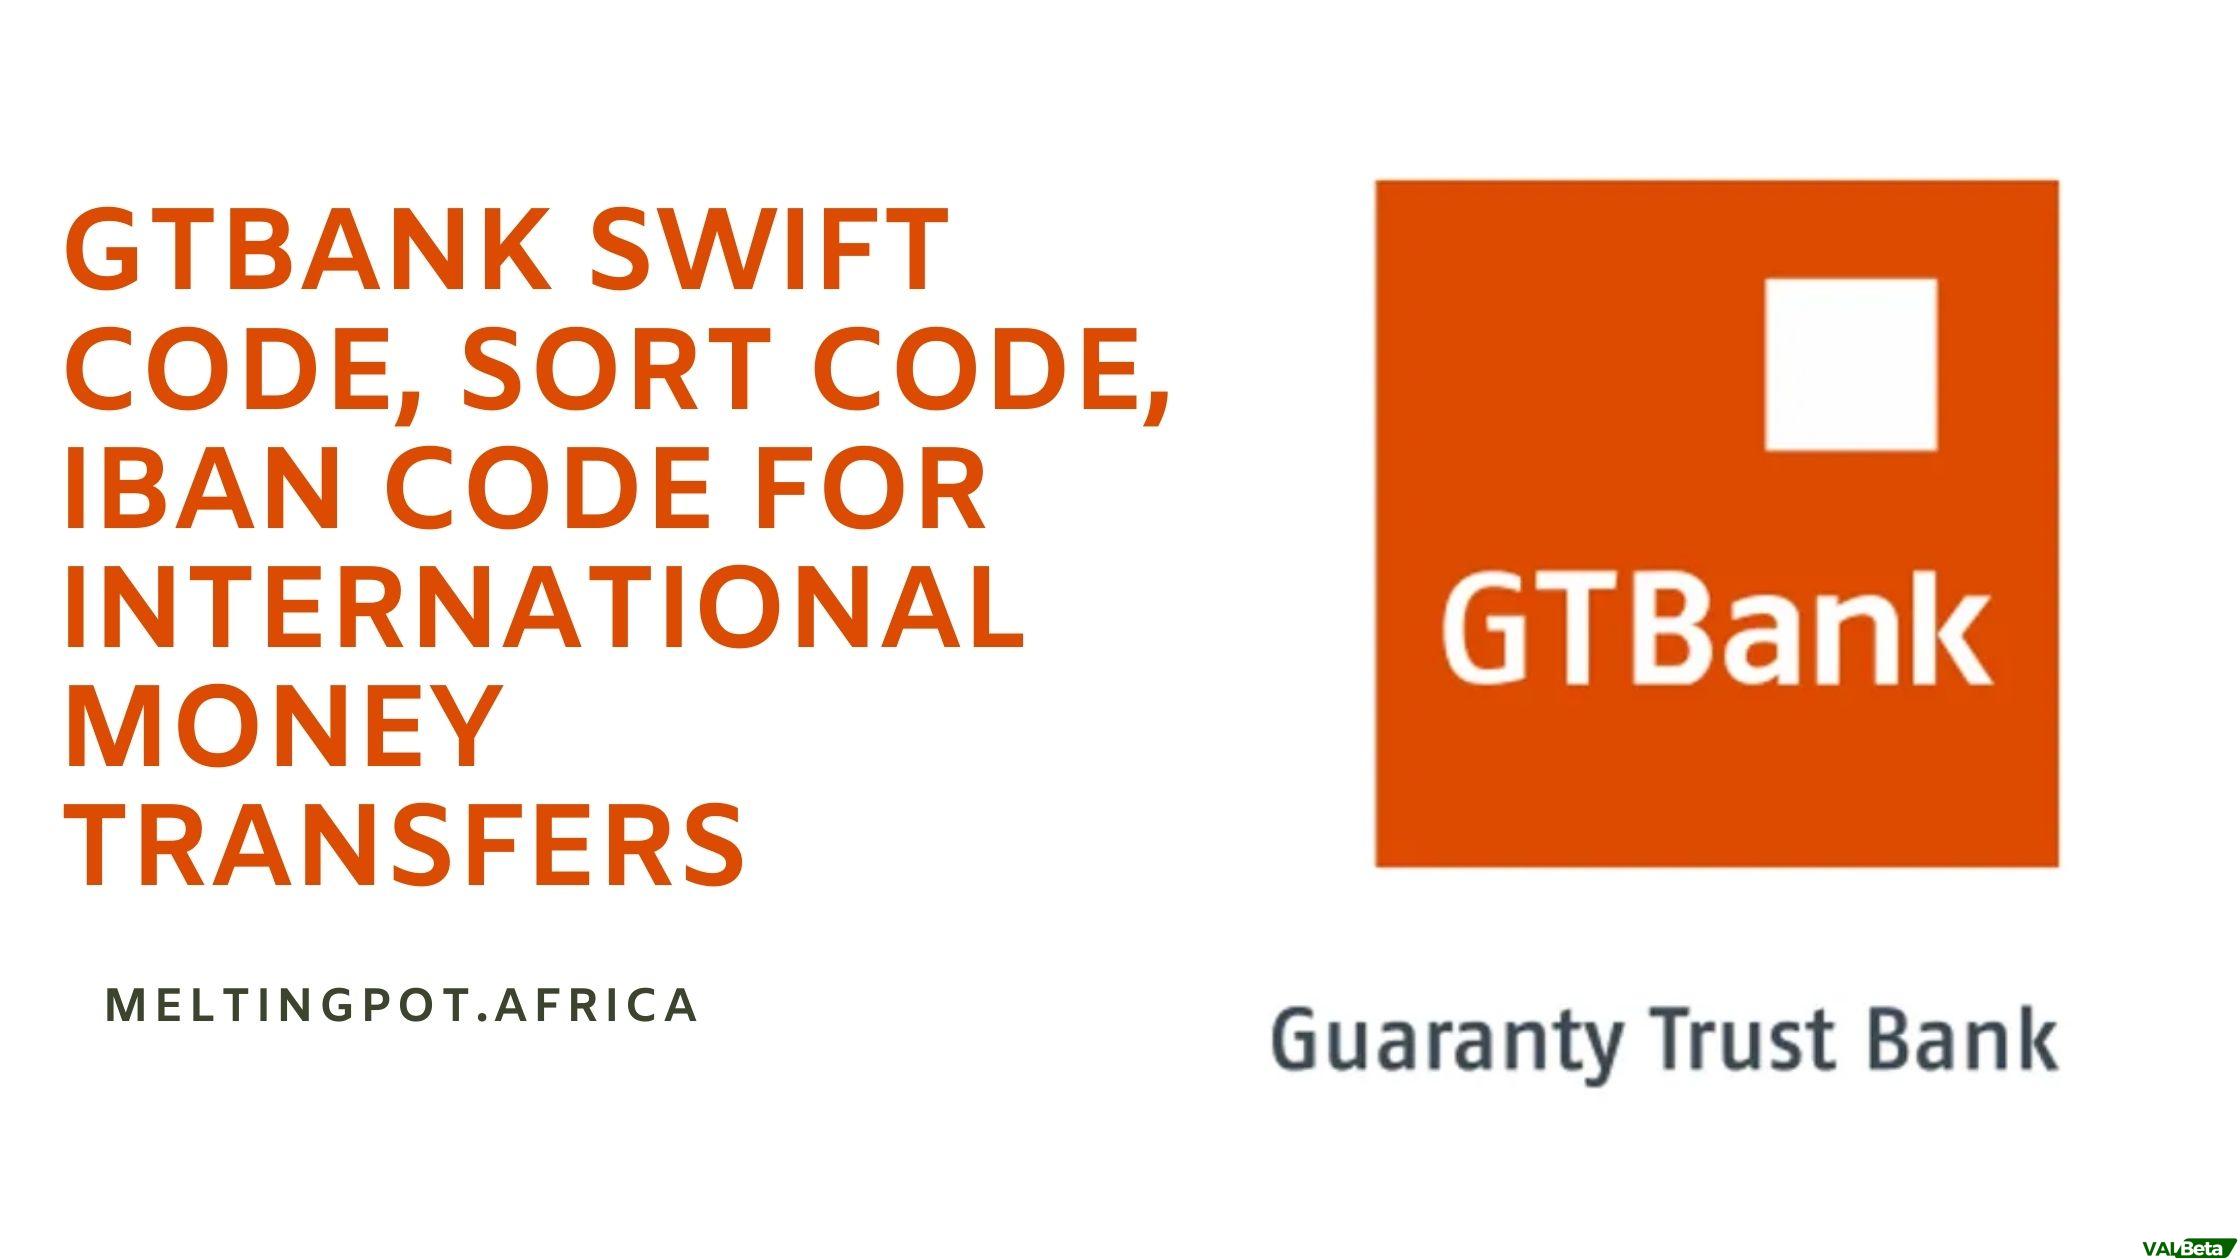 SWIFT/BIC code for Guaranty Trust Bank (GTBank) in Nigeria is GTBINGLA.